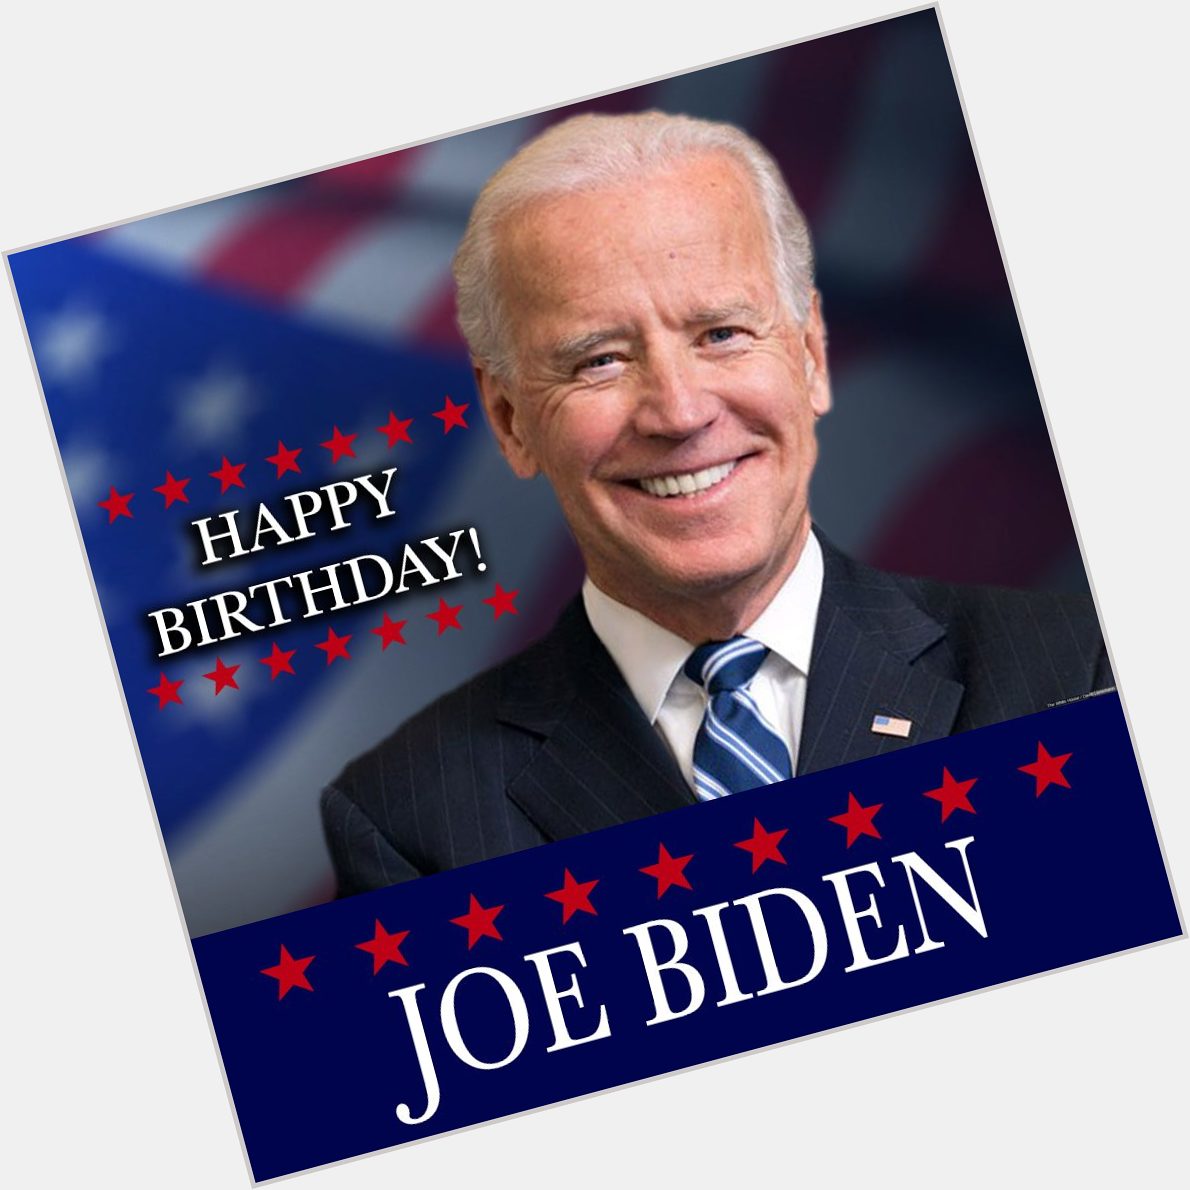 Happy Birthday Joe Biden! He turns 79 years old today! 